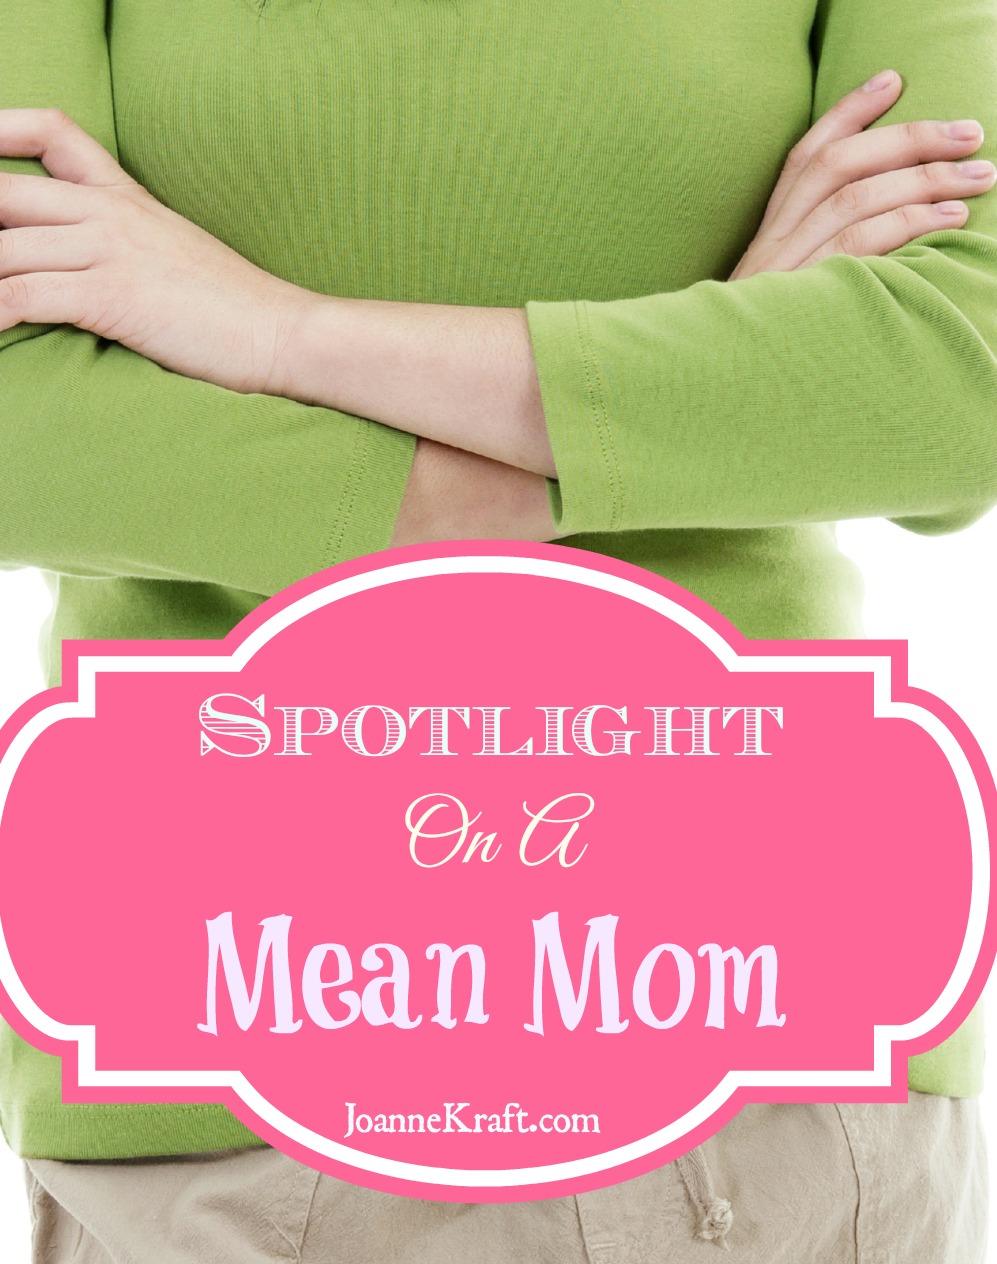 Spotlight on a Mean Mom - JoanneKraft.com